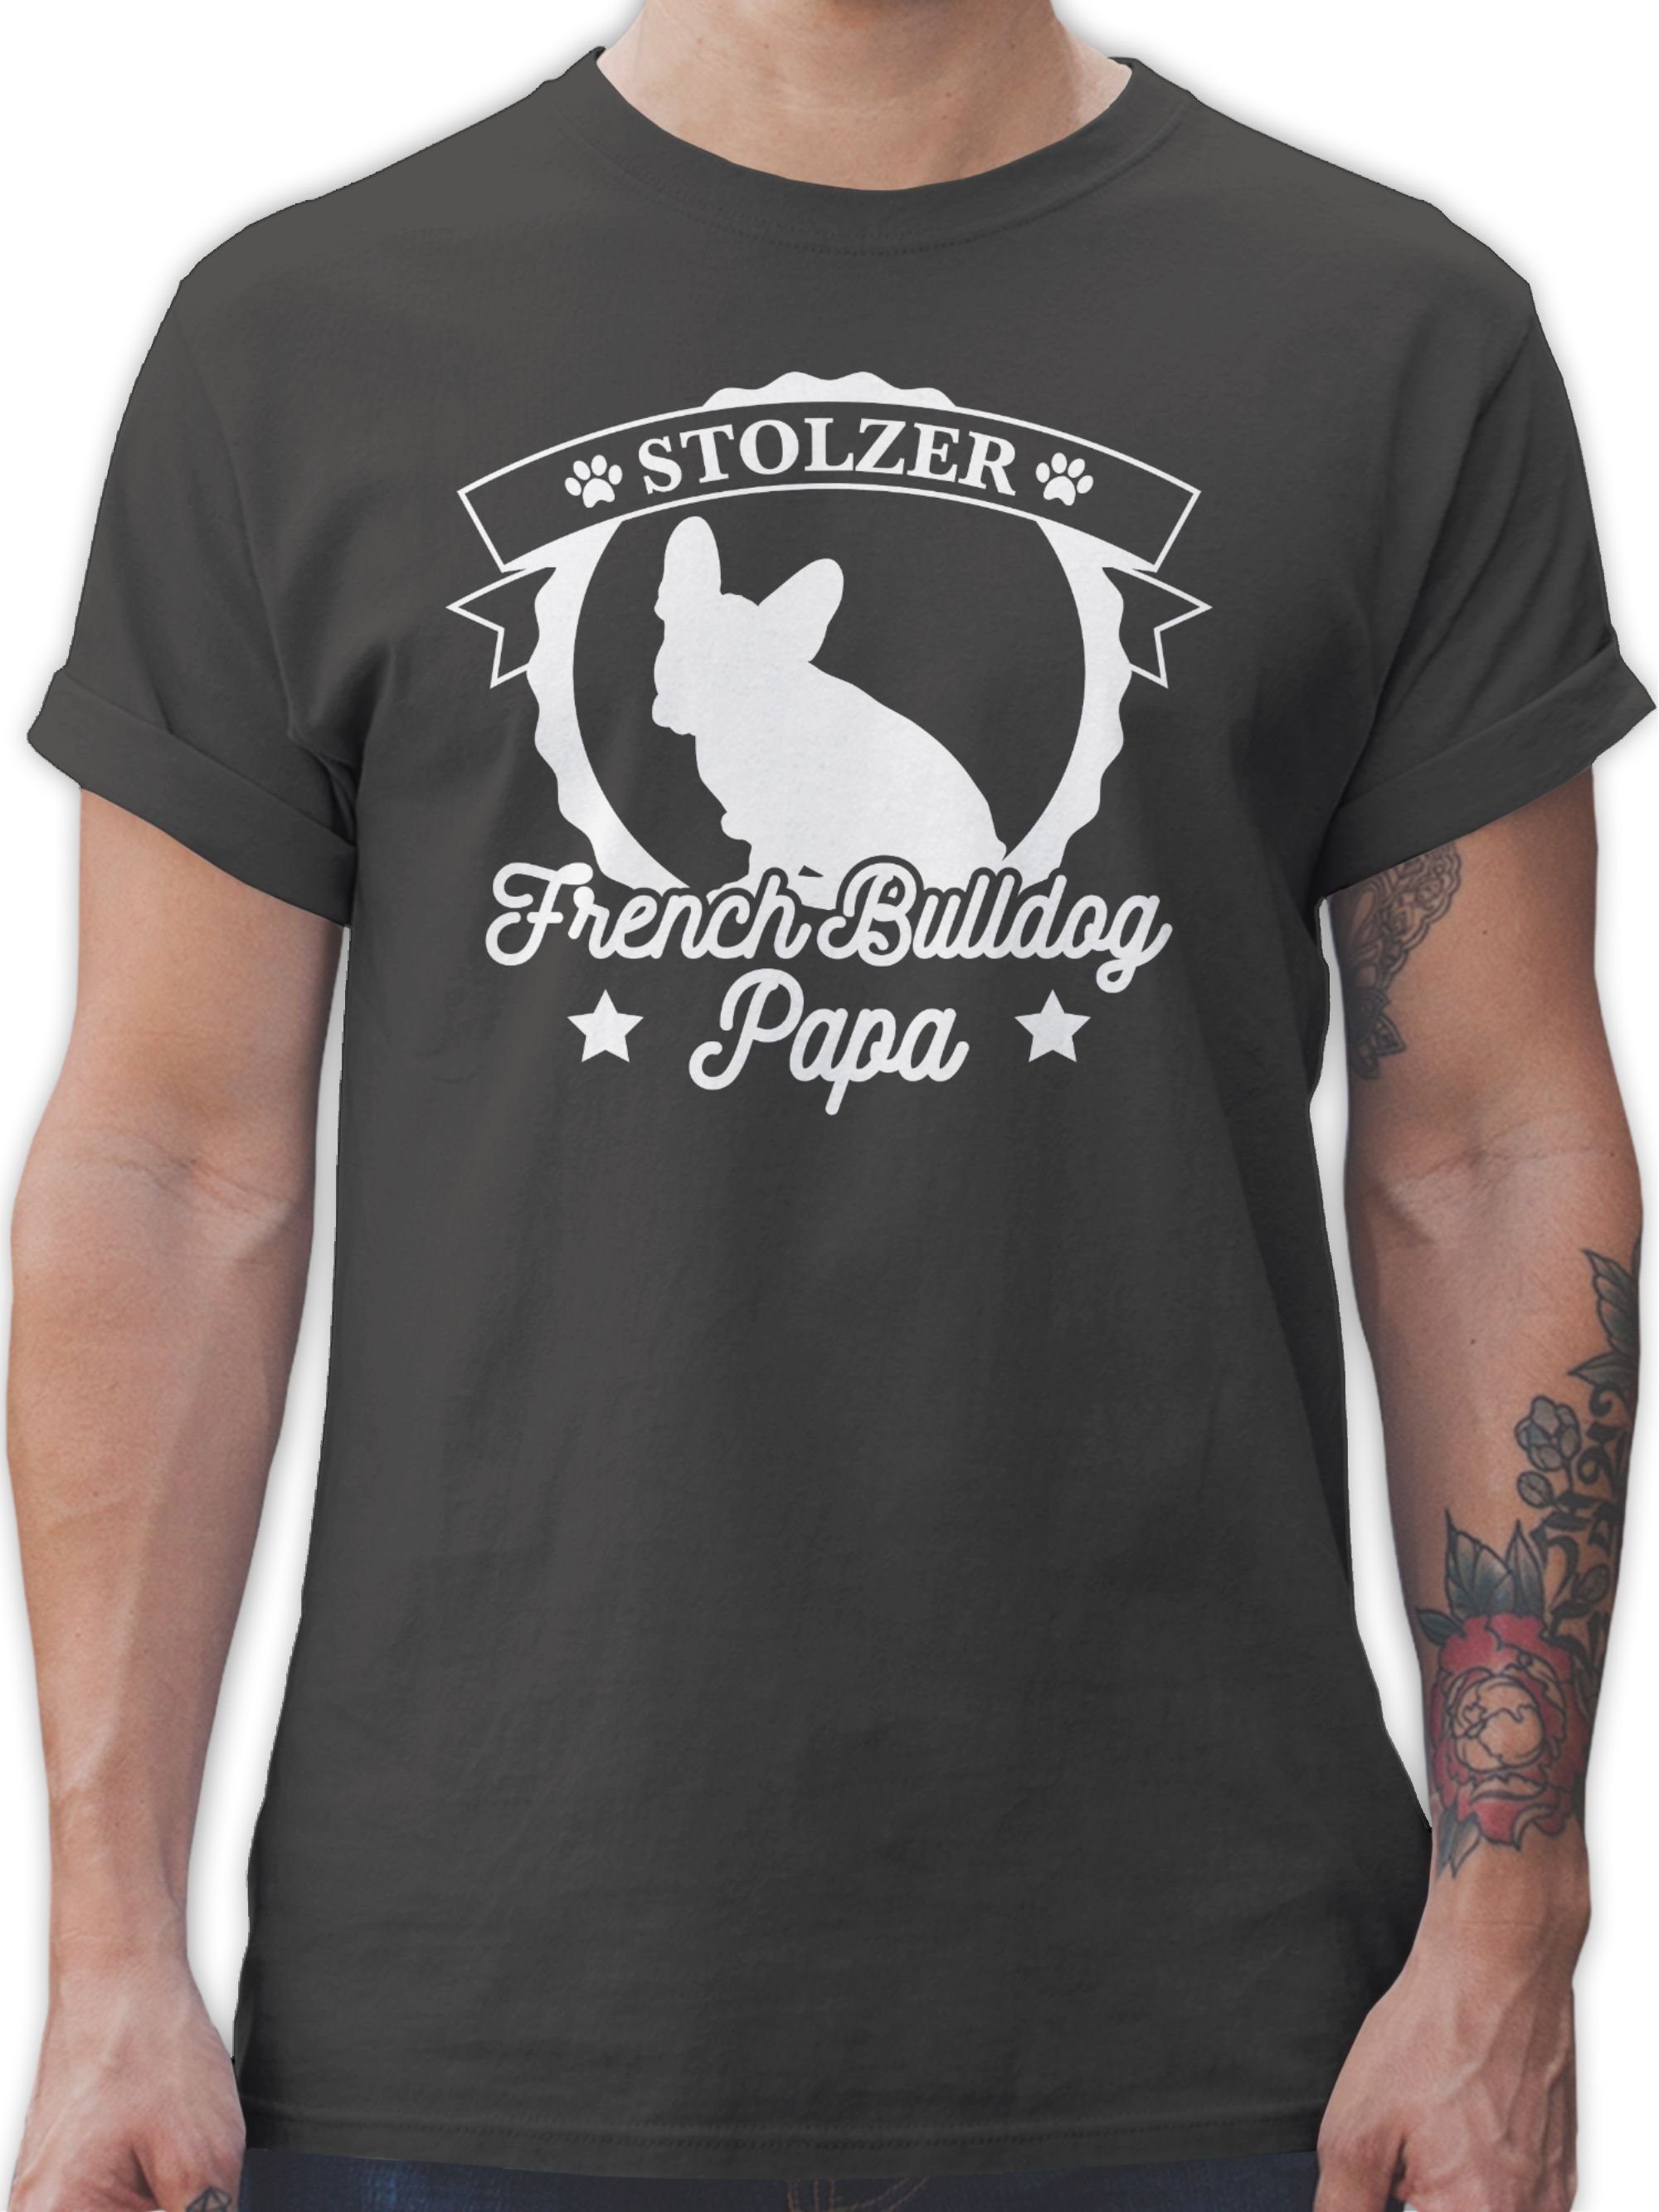 Geschenk 2 Stolzer für T-Shirt Dunkelgrau Papa Bulldog Shirtracer Hundebesitzer French